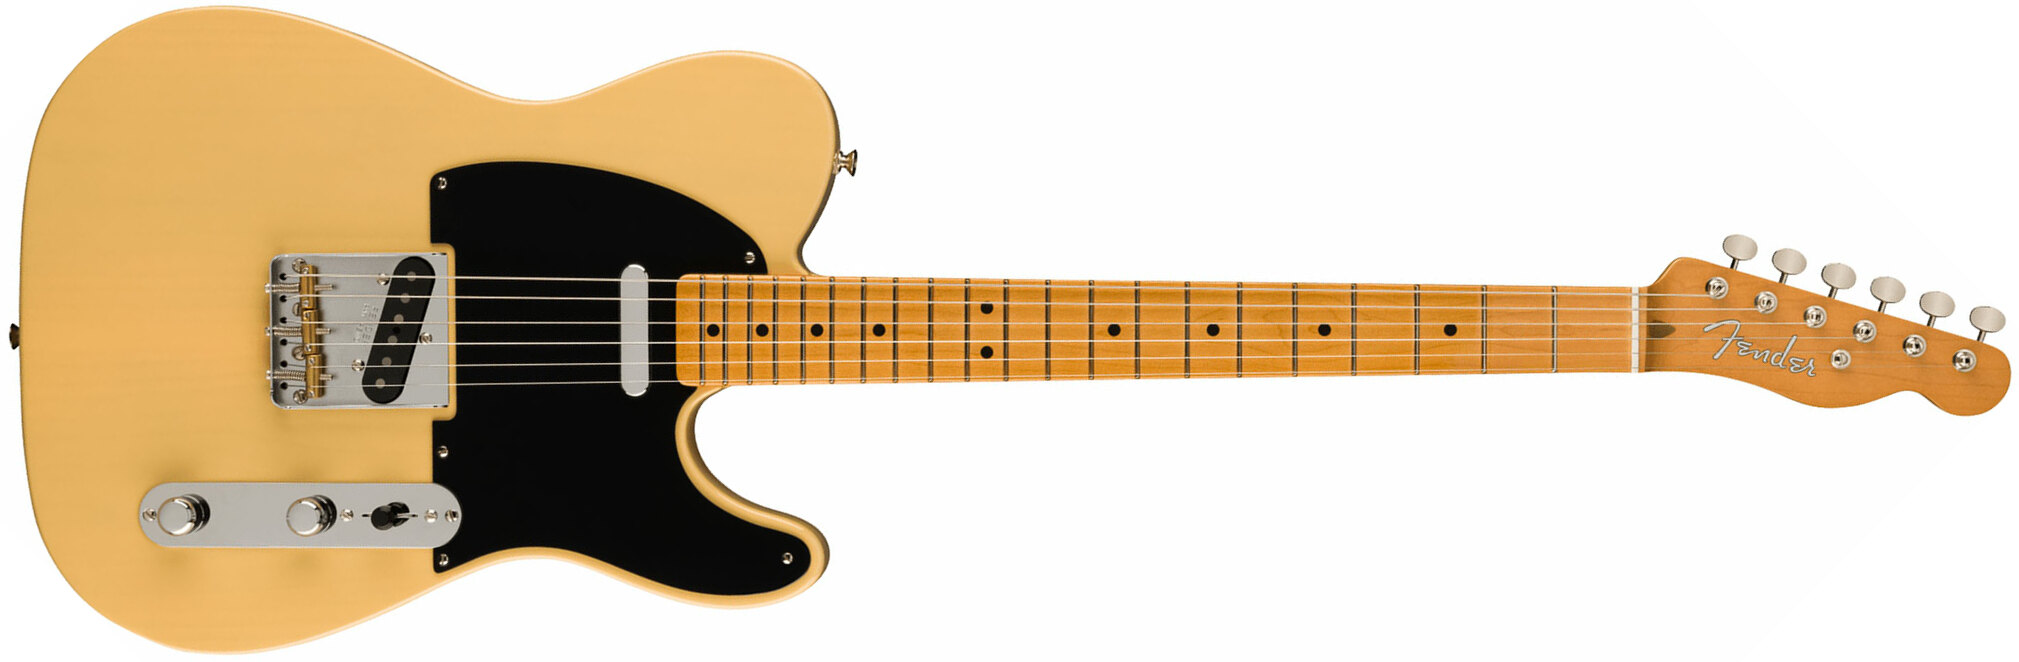 Fender Tele Nocaster 50s Vintera 2 Mex 2s Ht Mn - Blackguard Blonde - Tel shape electric guitar - Main picture